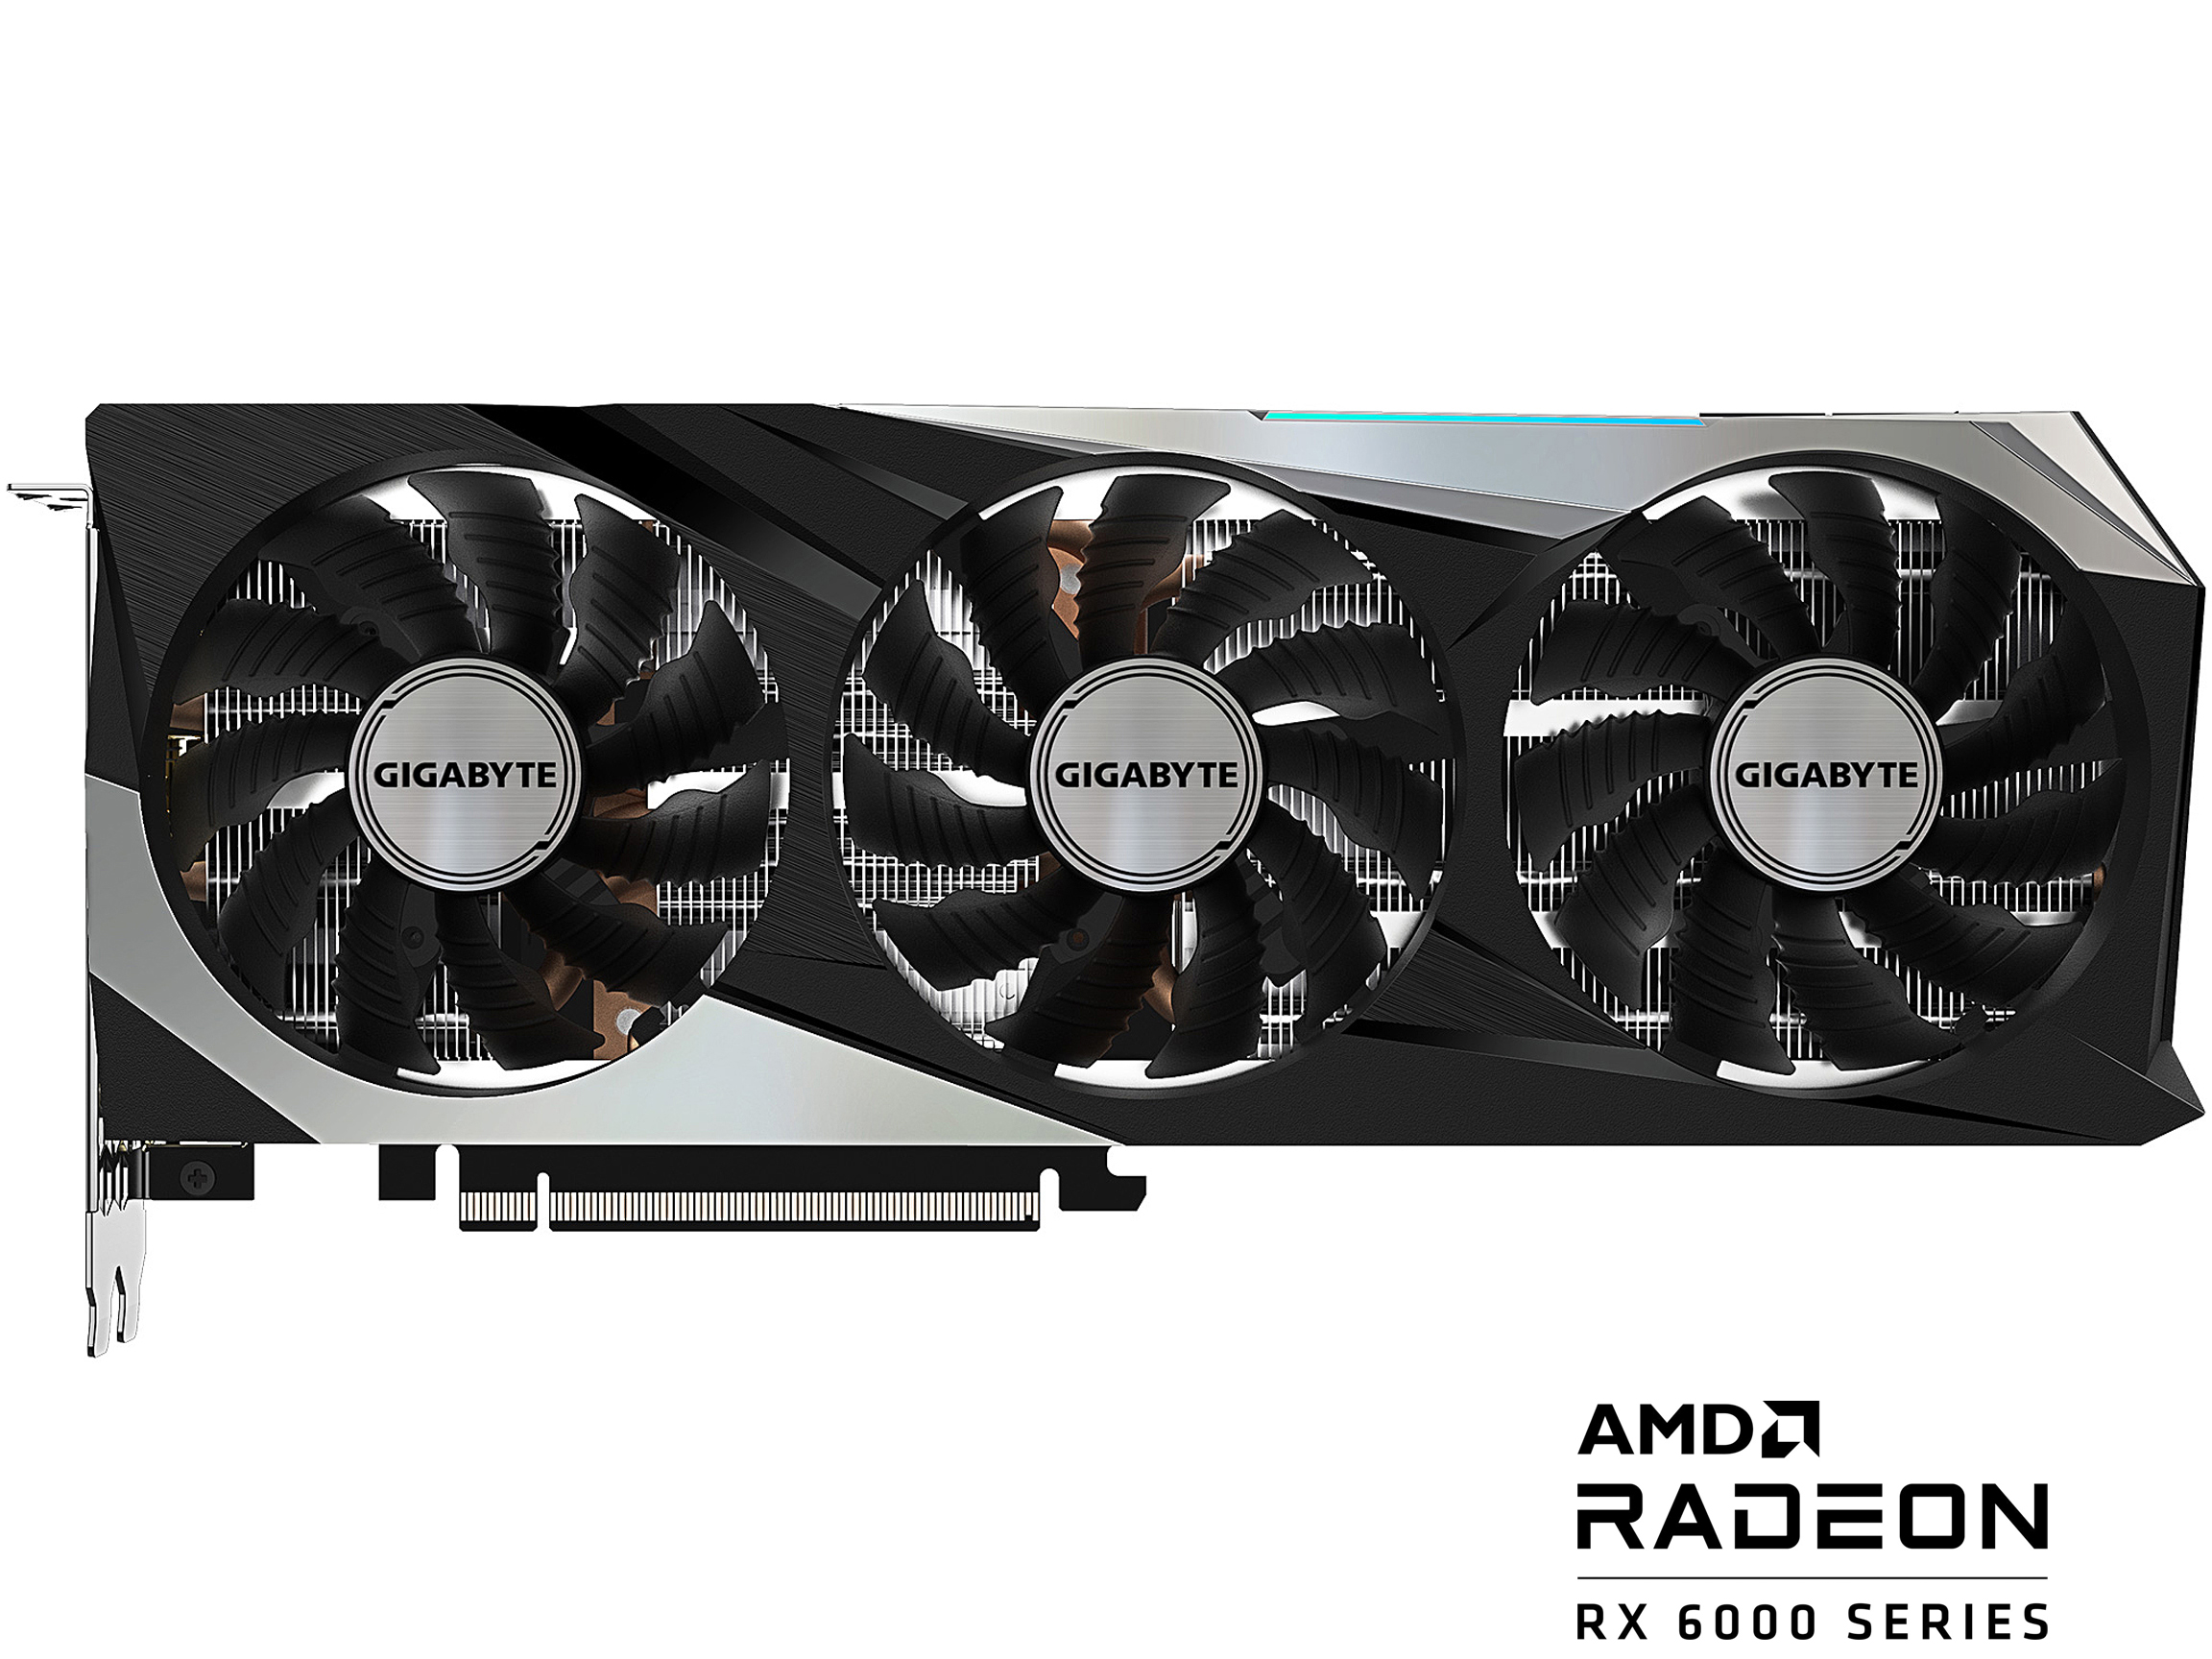 Gigabyte Radeon RX 6800 XT 16gb Gaming OC $540 shipped @Newegg and Amazon